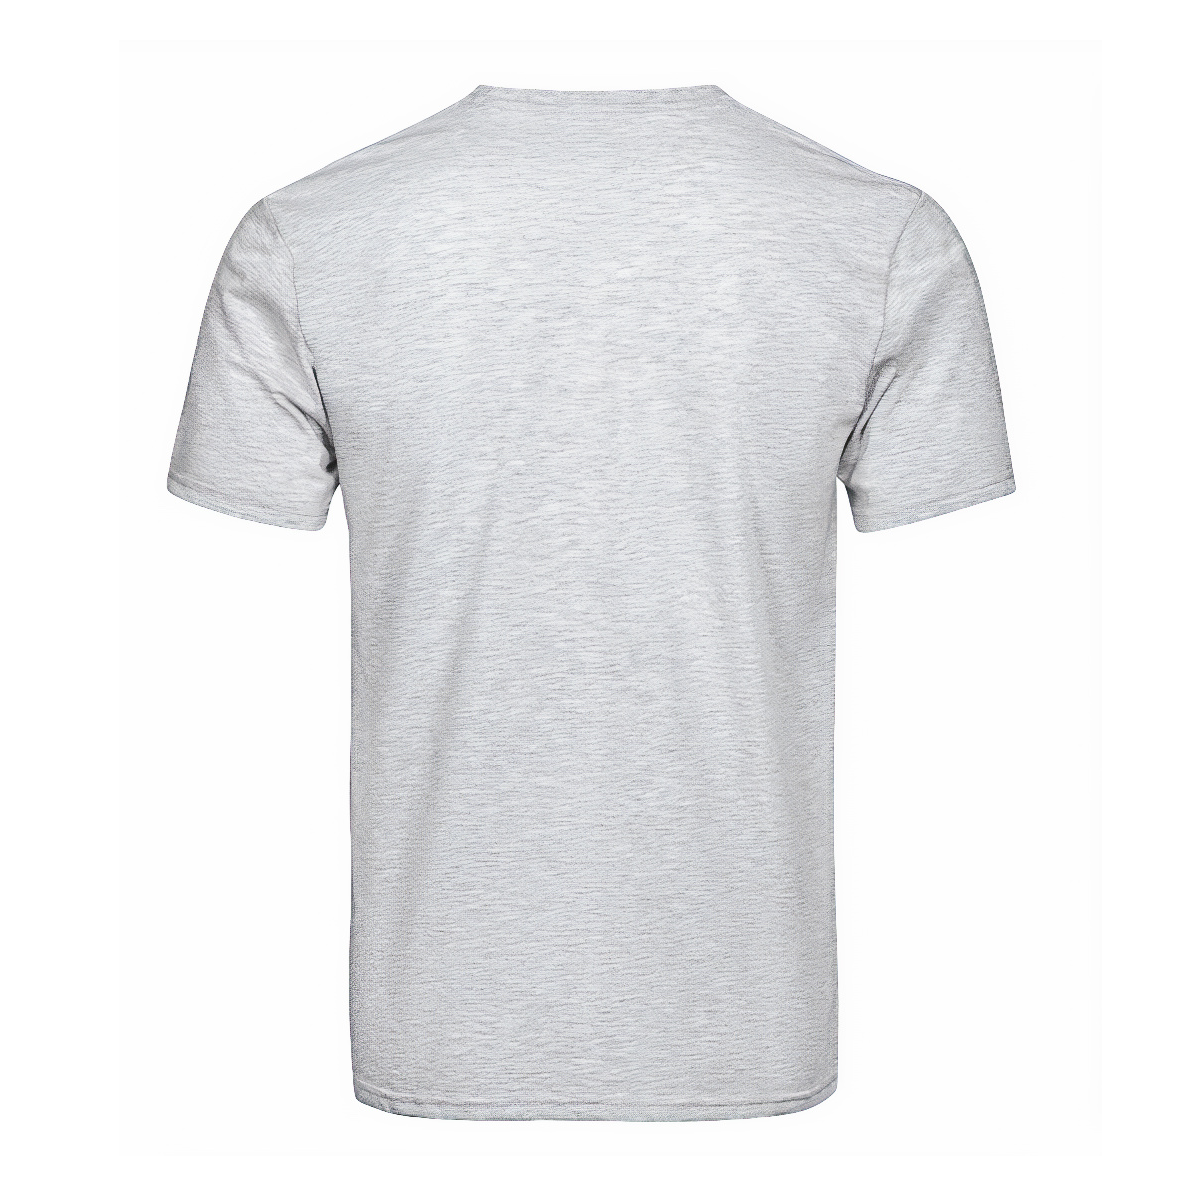 Kincaid Tartan Crest T-shirt - I'm not yelling style